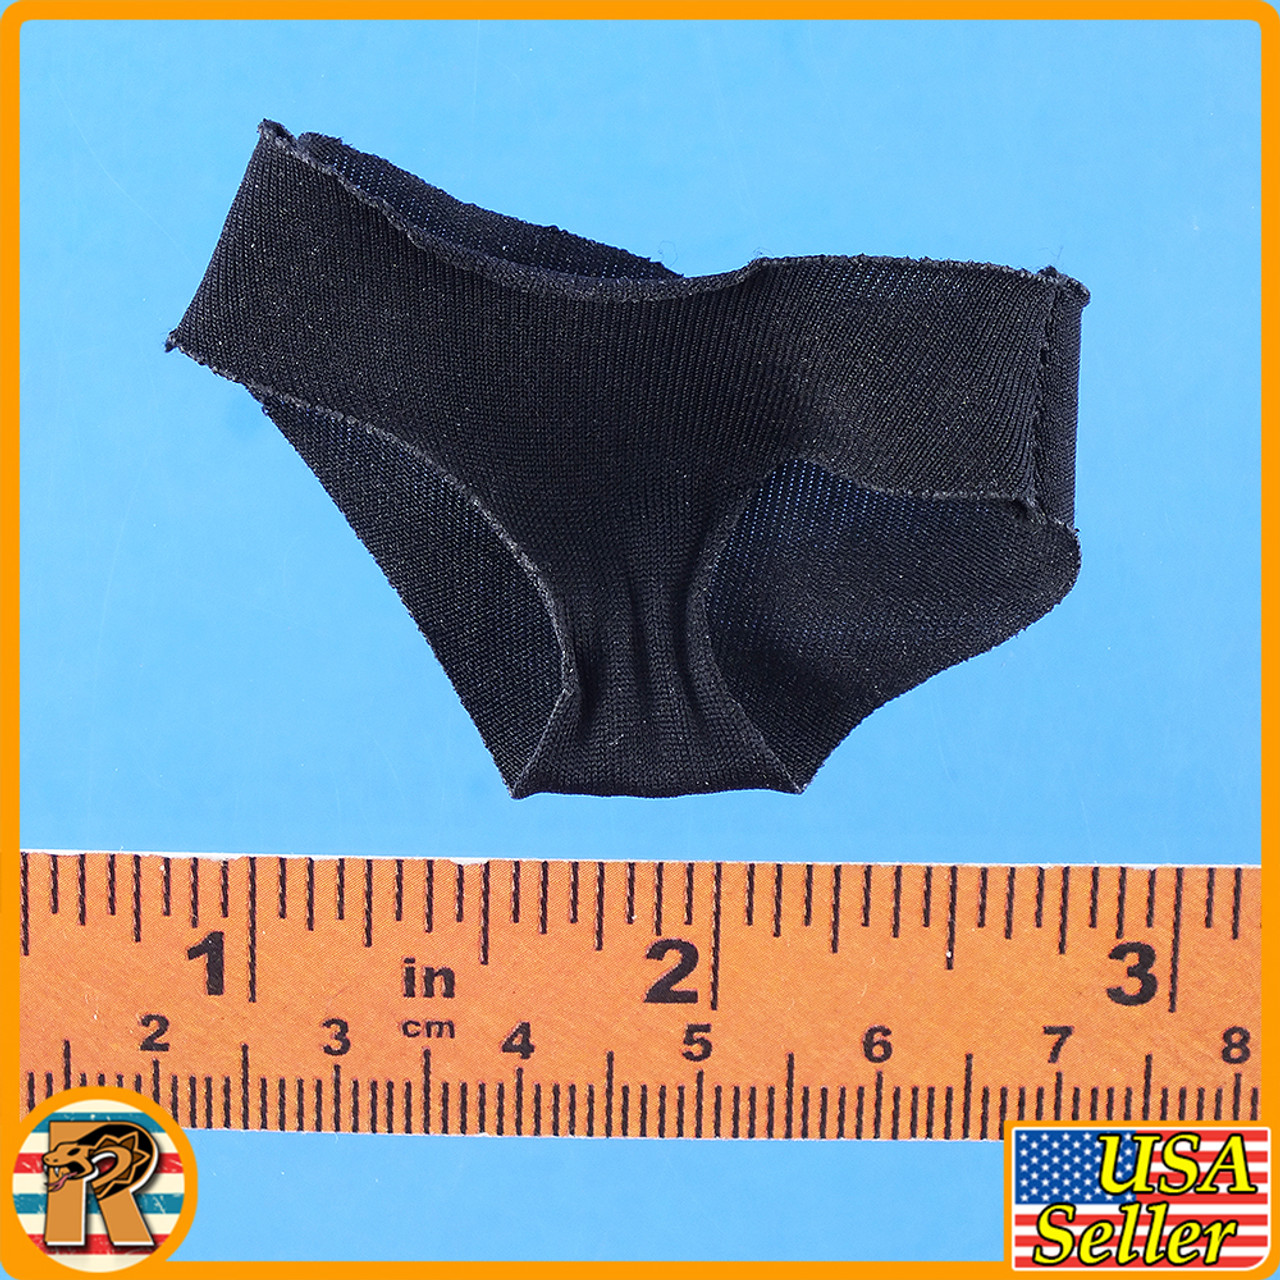 Amazon Soldier Female (Black) - Black Underwear Panties - 1/6 Scale -